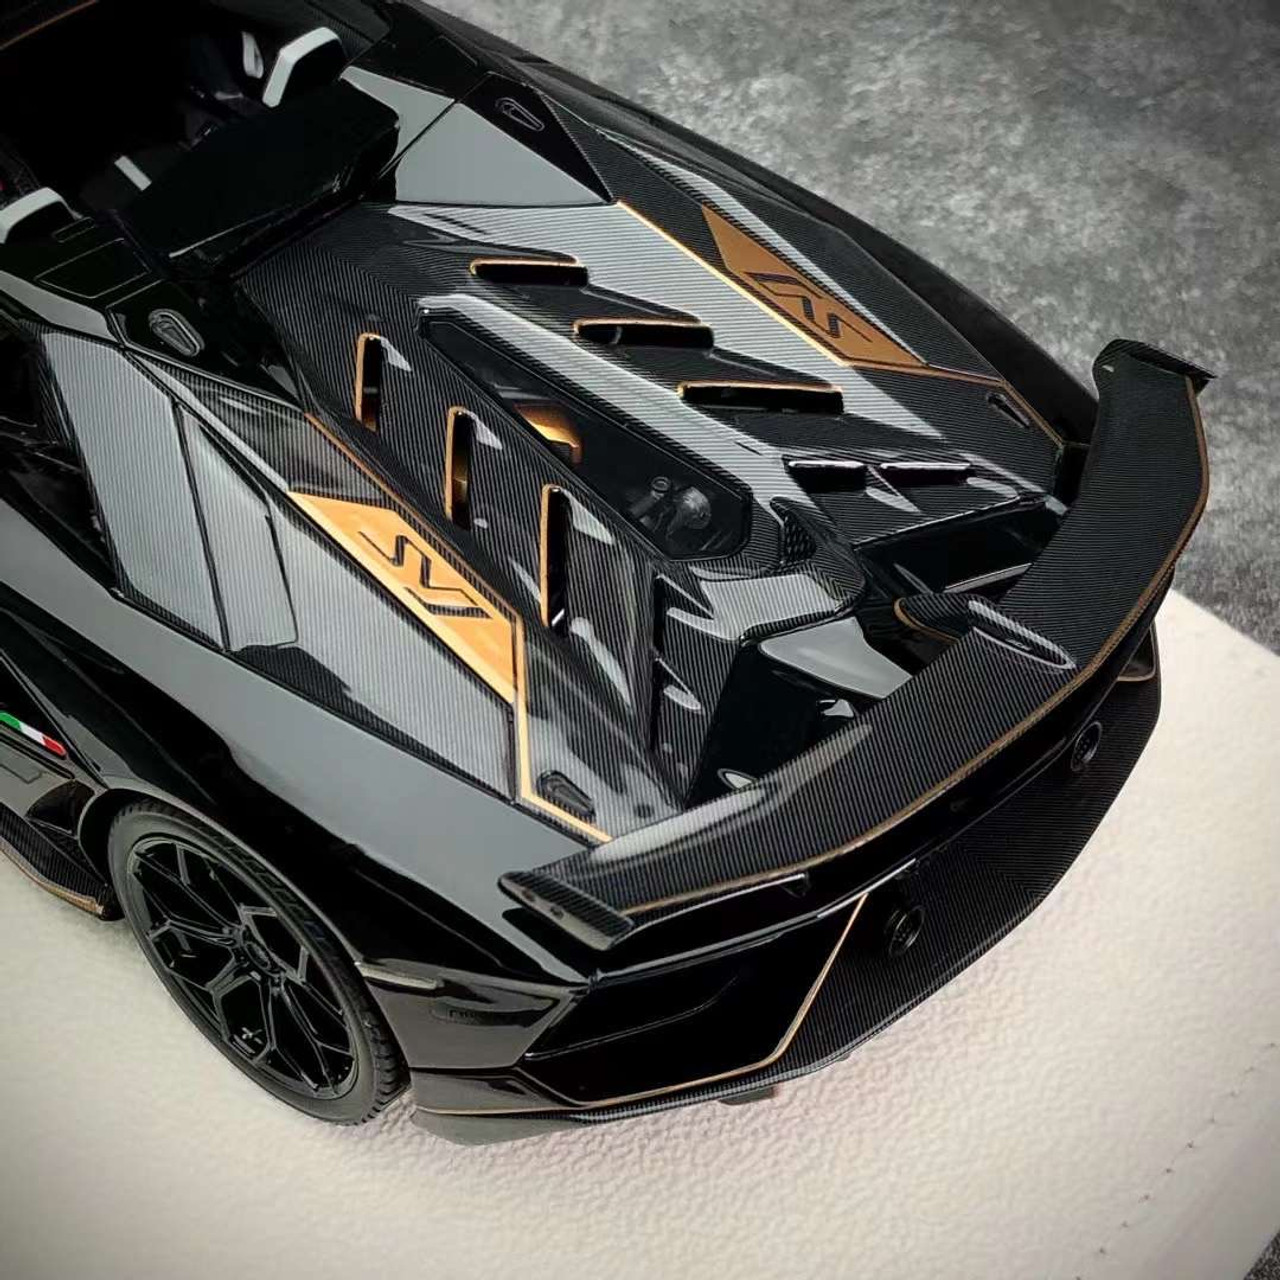 1/18 Makeup Lamborghini Aventador SVJ #63 (Black) Resin Car Model